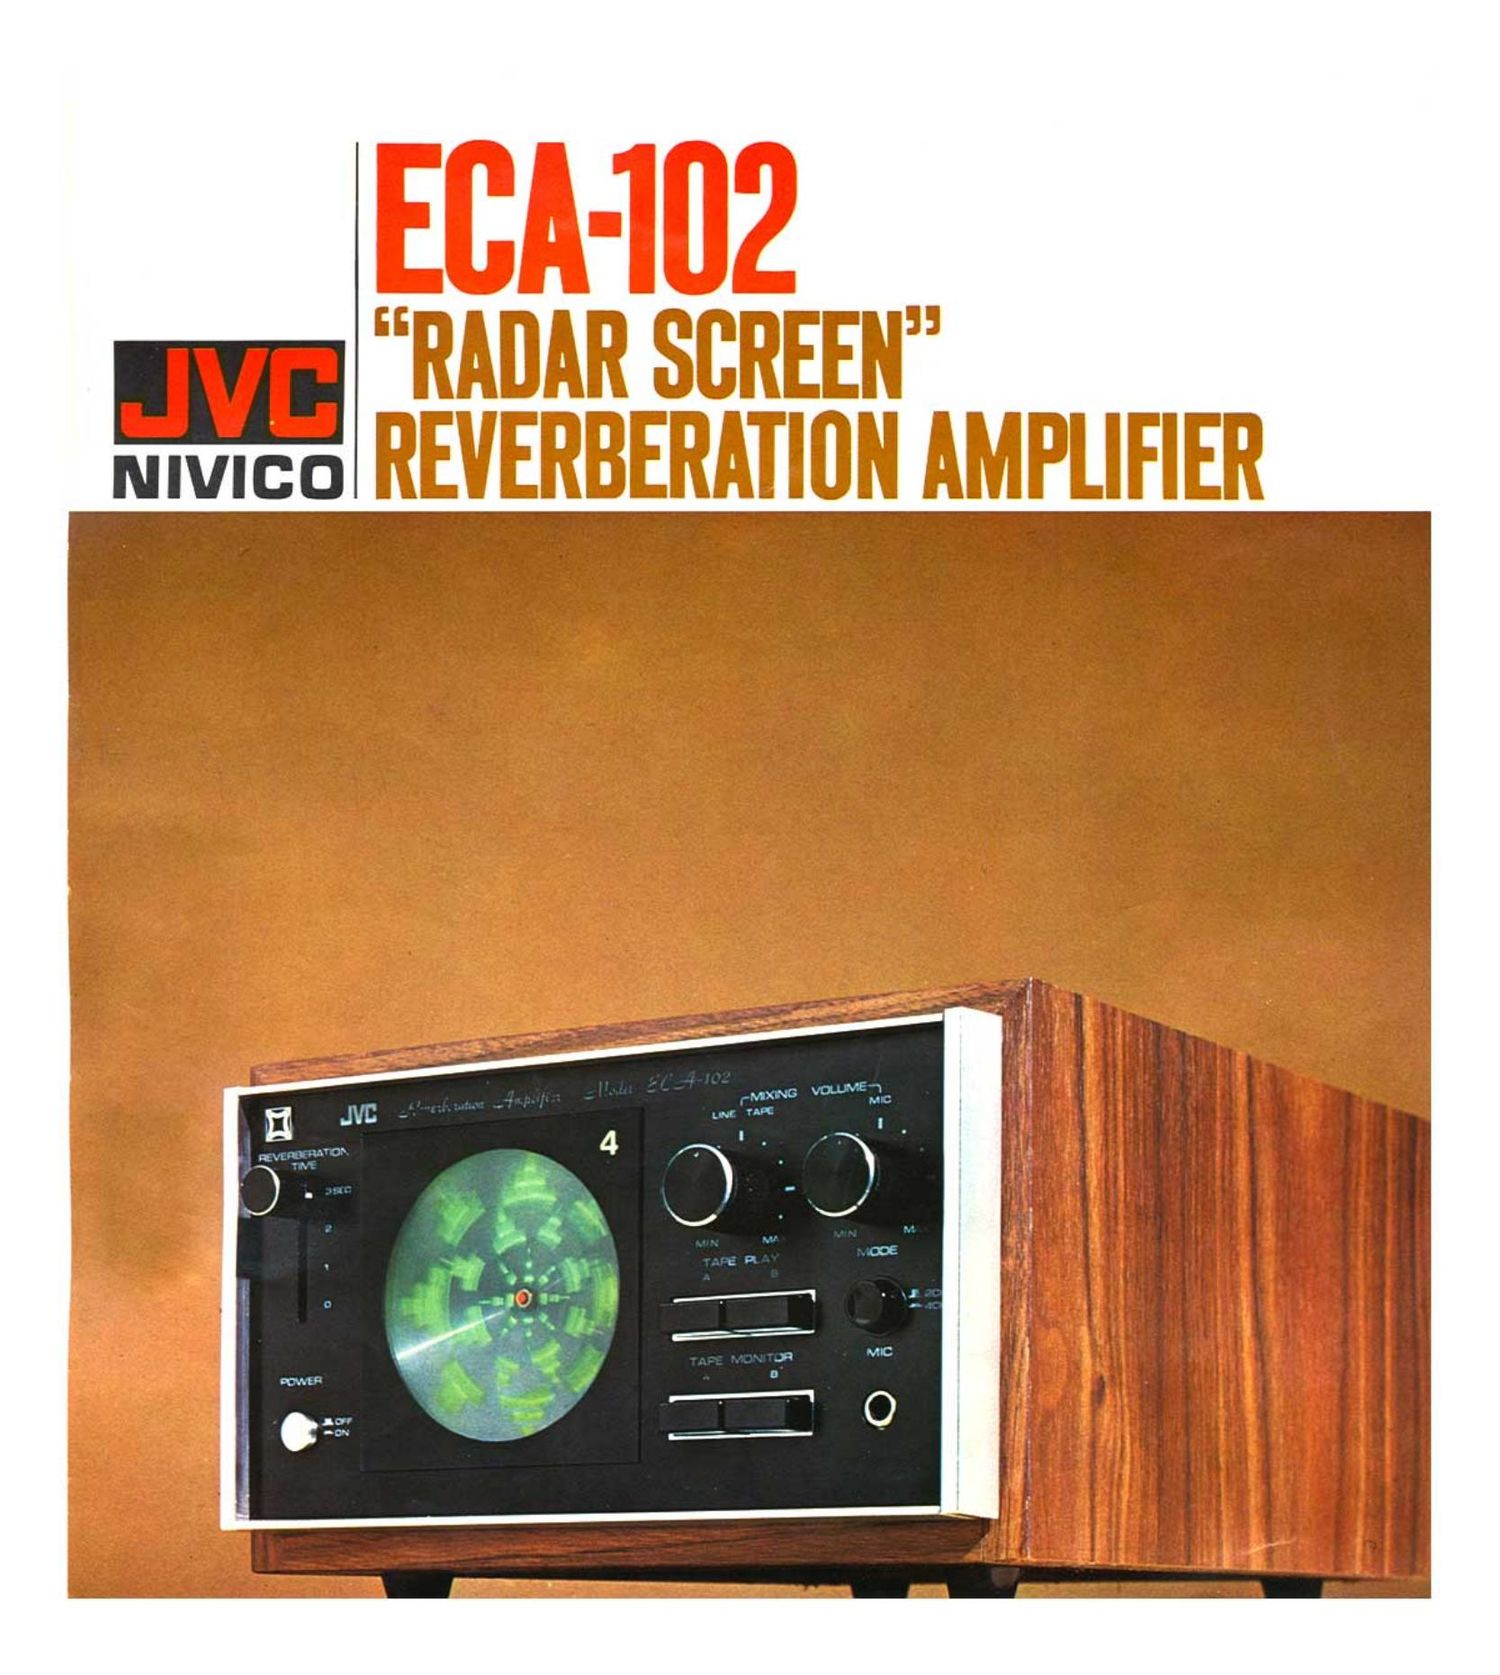 Jvc ECA 102 Brochure